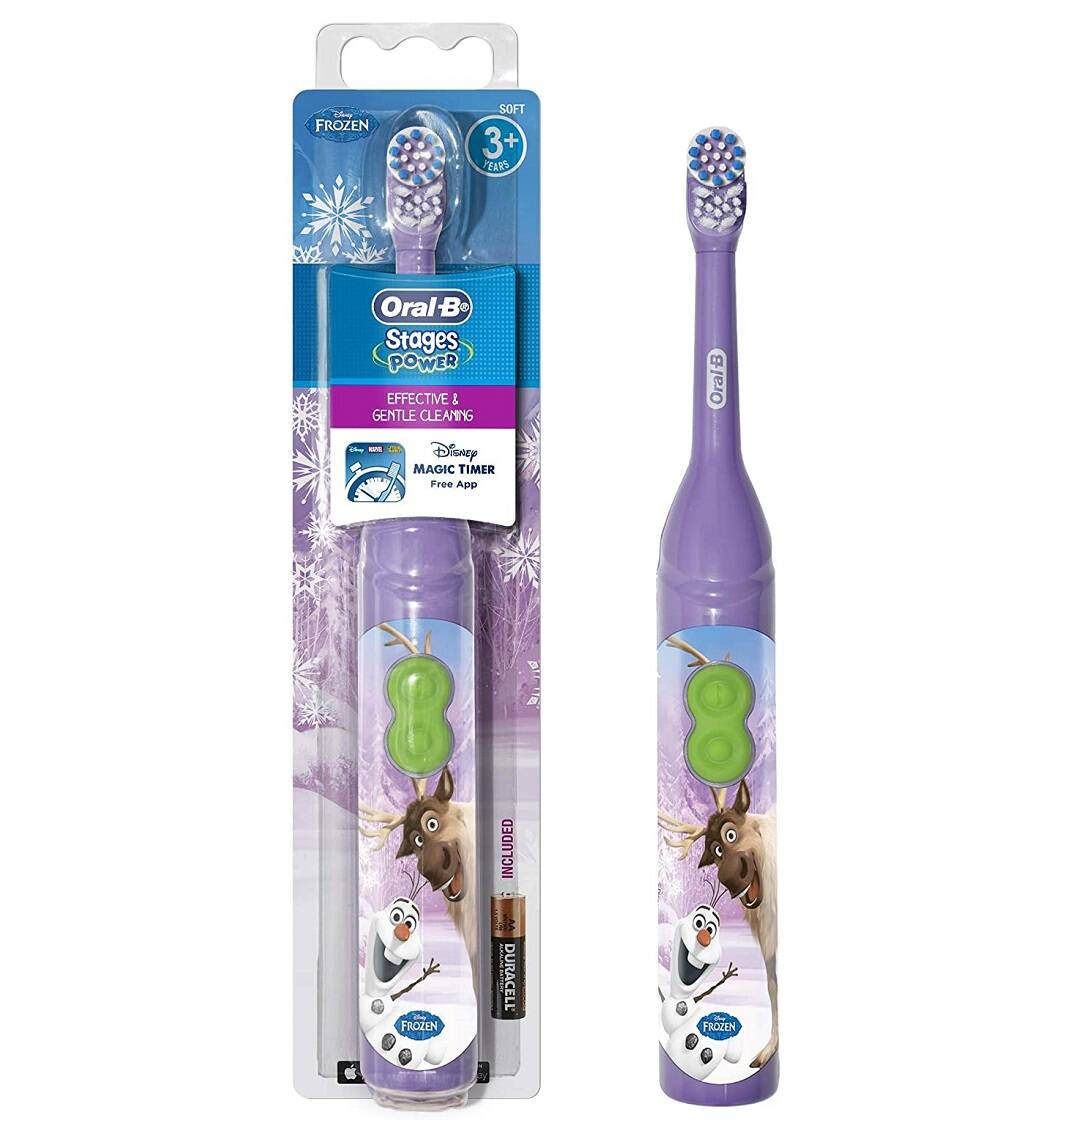 مسواک برقی کودک Frozen اورال بی اصل انگلیس باتری دار مدل فروزن (Oral-B Stages Power Kids Disney Frozen Battery Toothbrush with Timer App)